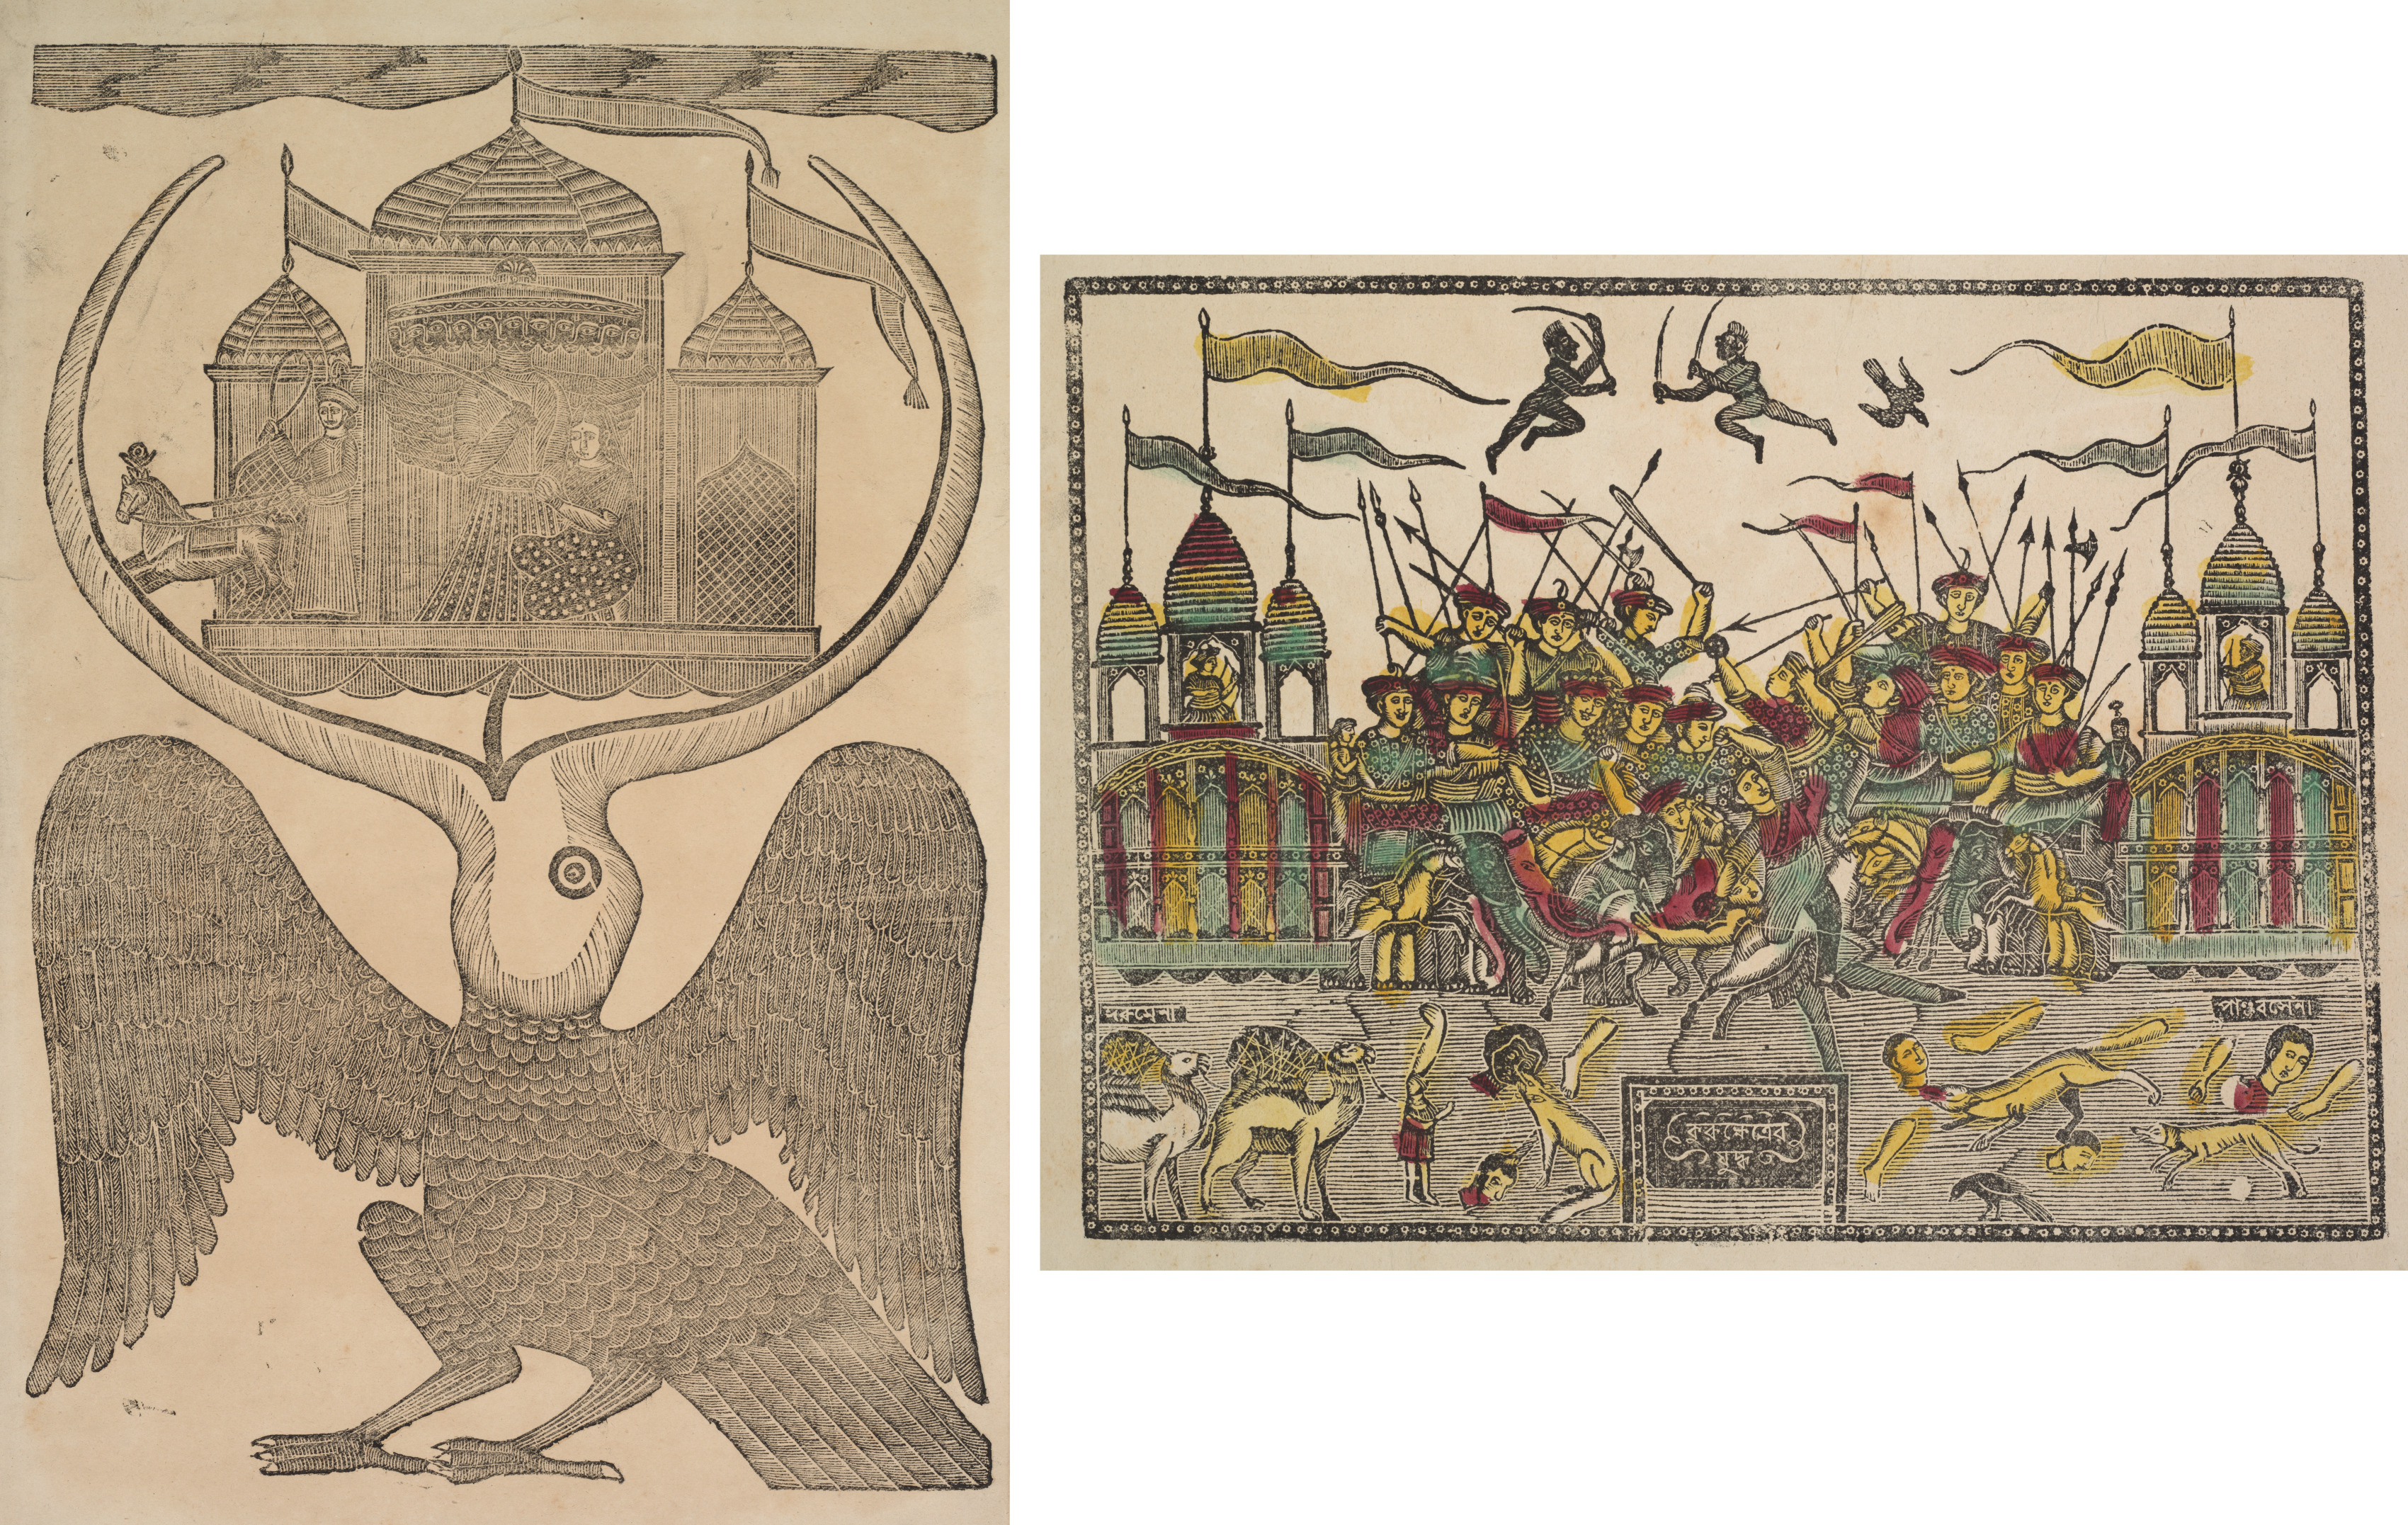 Leaf from a Kalighat album: Jatayu hinders Ravana’s chariot trying to prevent Sita’s abduction (recto); Battle Scene at Kurukshetra from the Mahabharata War (verso)